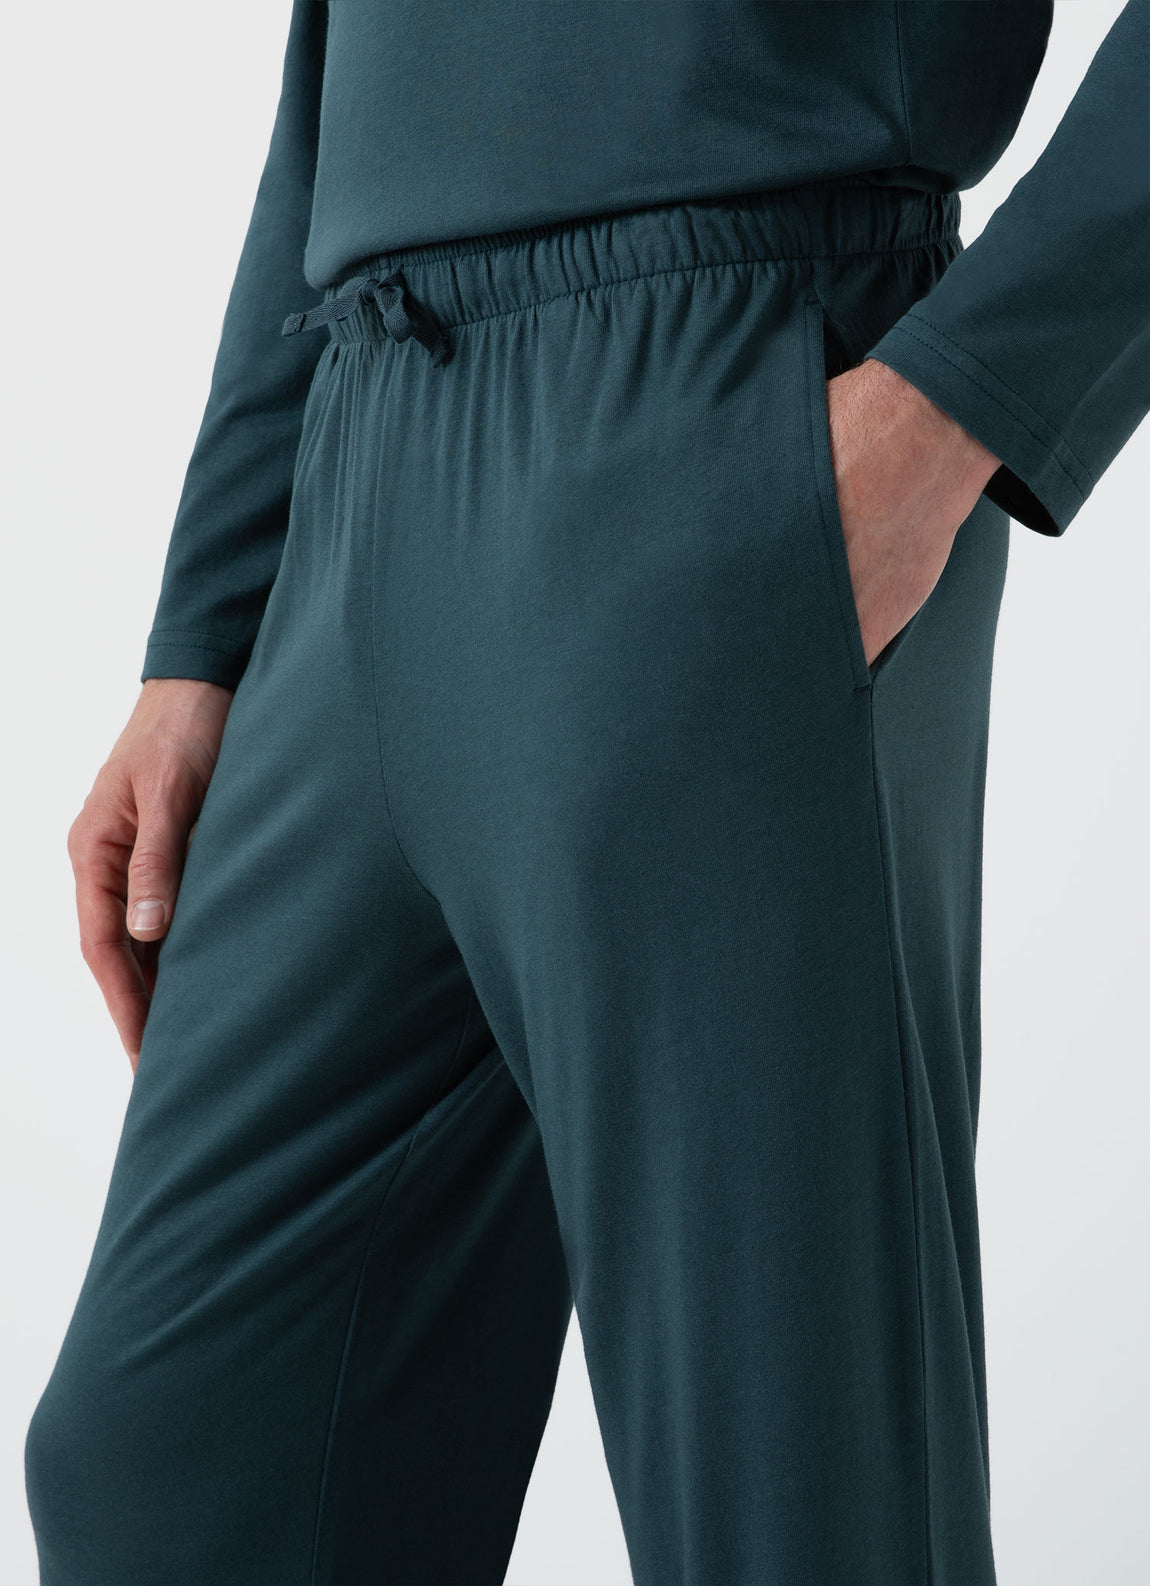 Men's Cotton Modal Lounge Pant in Peacock | Sunspel